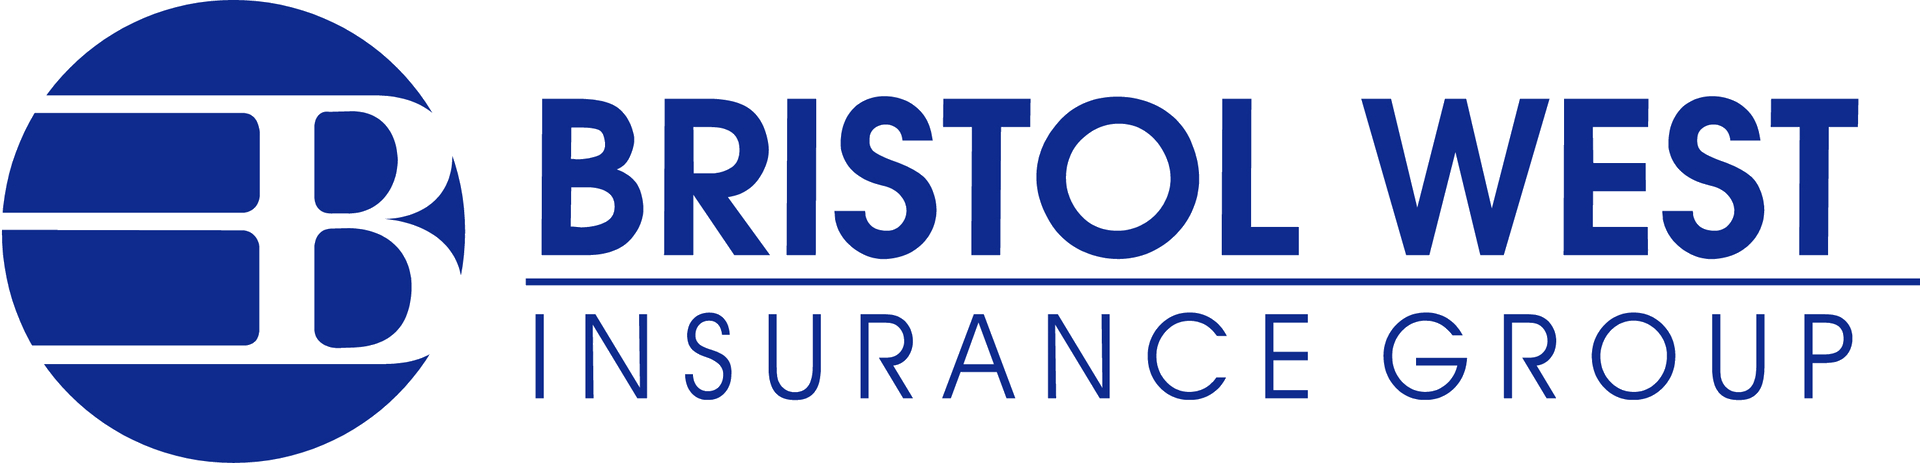 Auto Insurance - Bristol West Insurance Agency - 800-771-7758